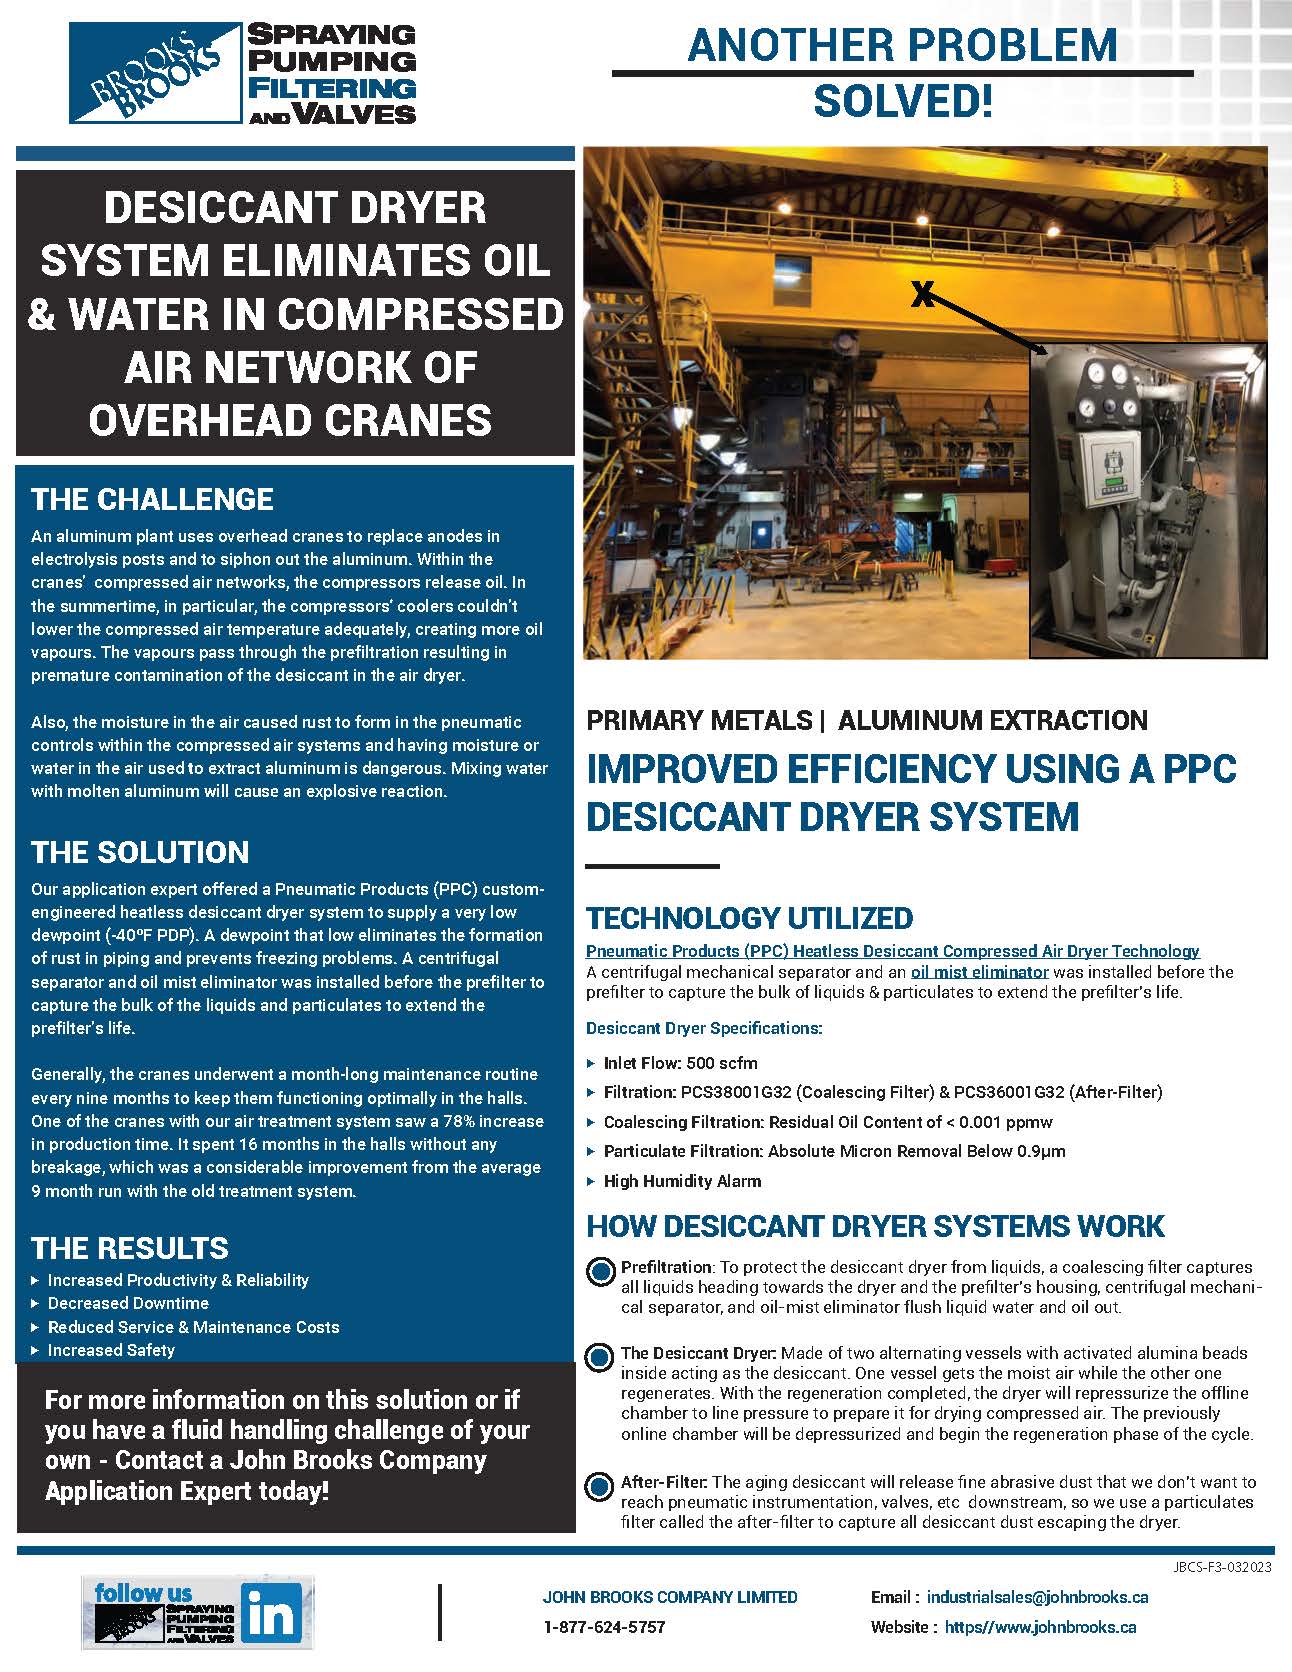 Desiccant Dryer System Improves Efficiency in Aluminum Plant